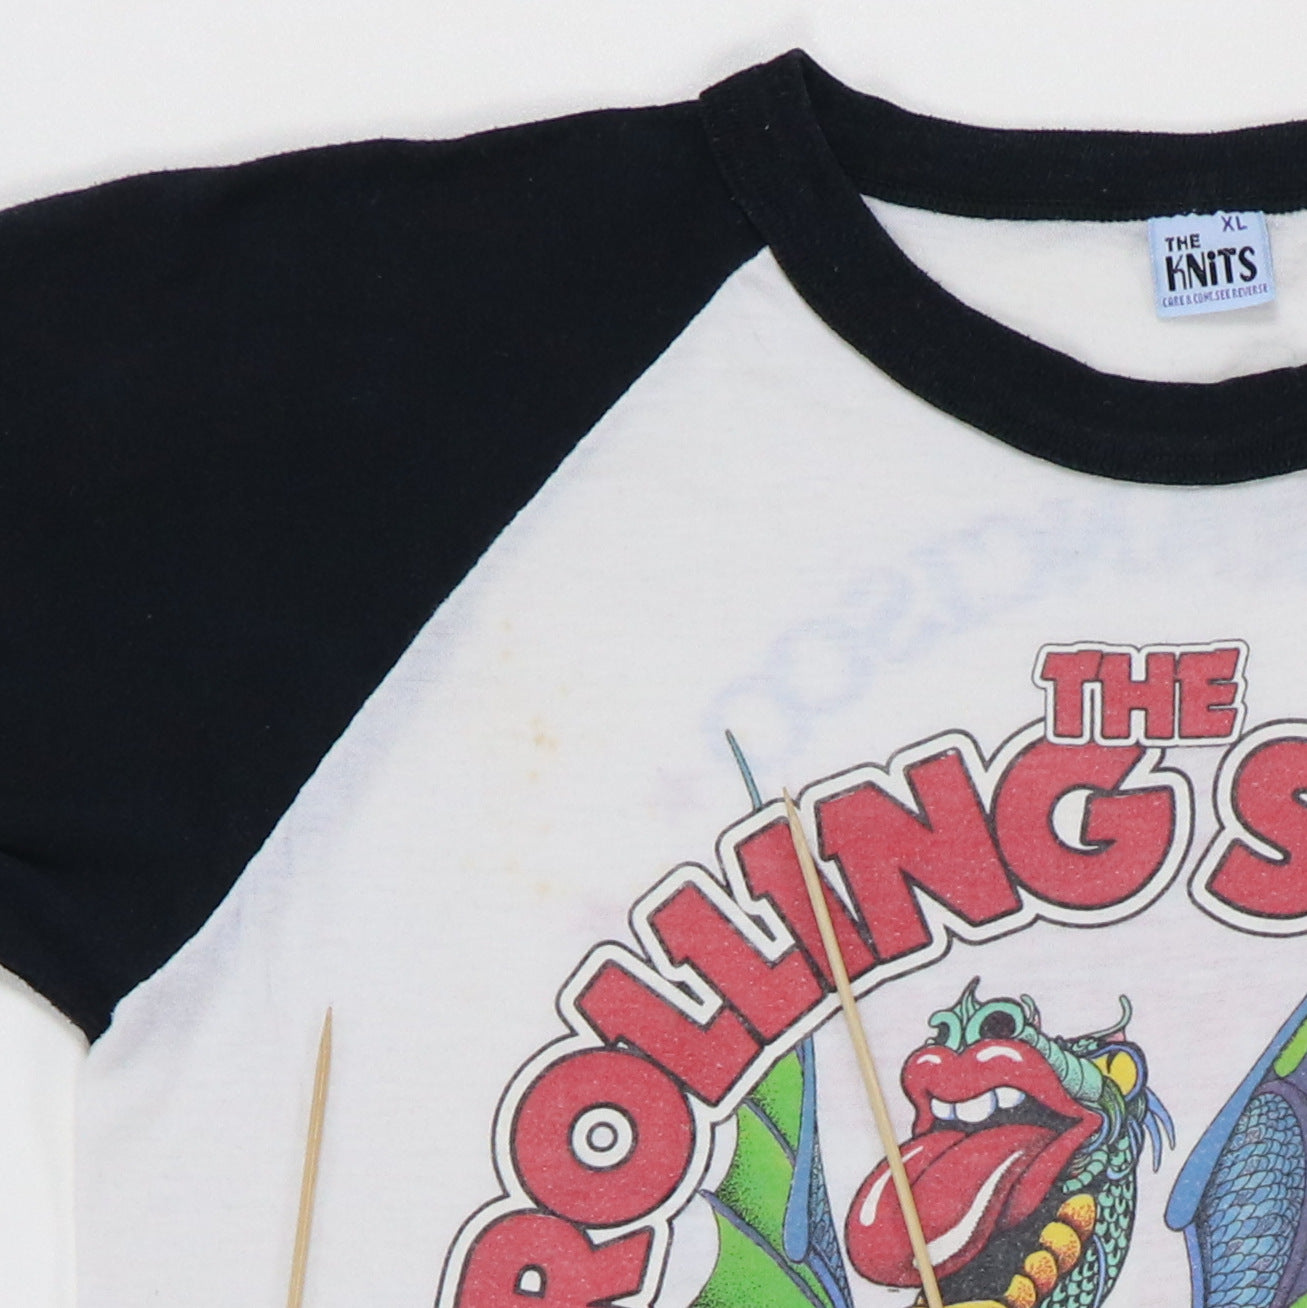 1981 Rolling Stones Tour Jersey Shirt